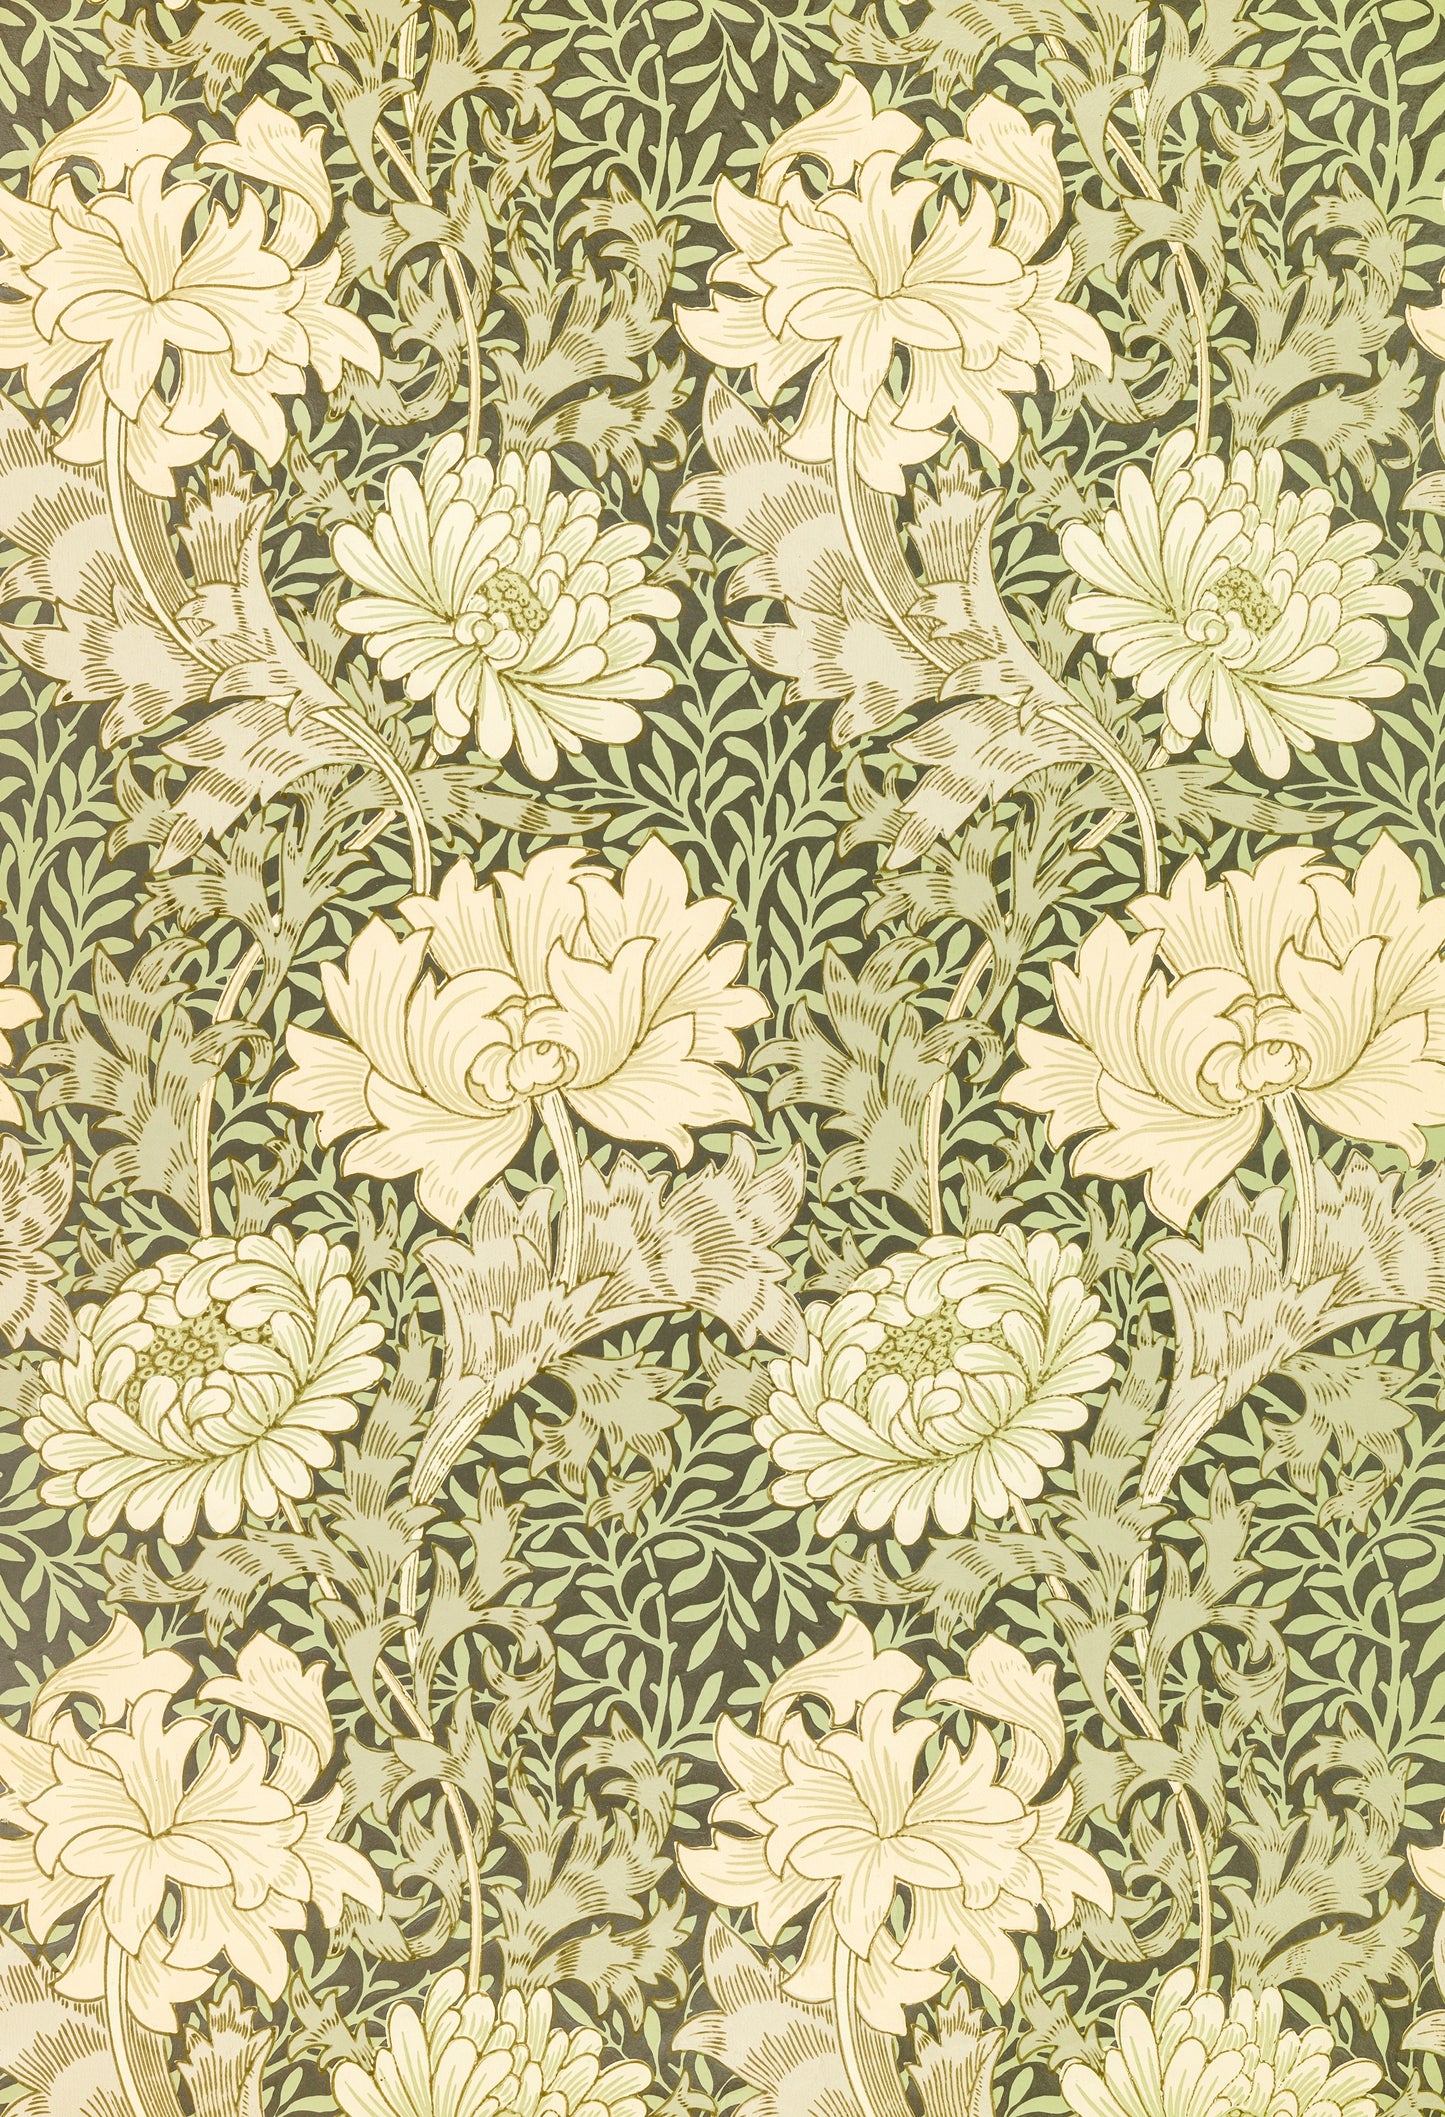 Chrysanthemum by William Morris